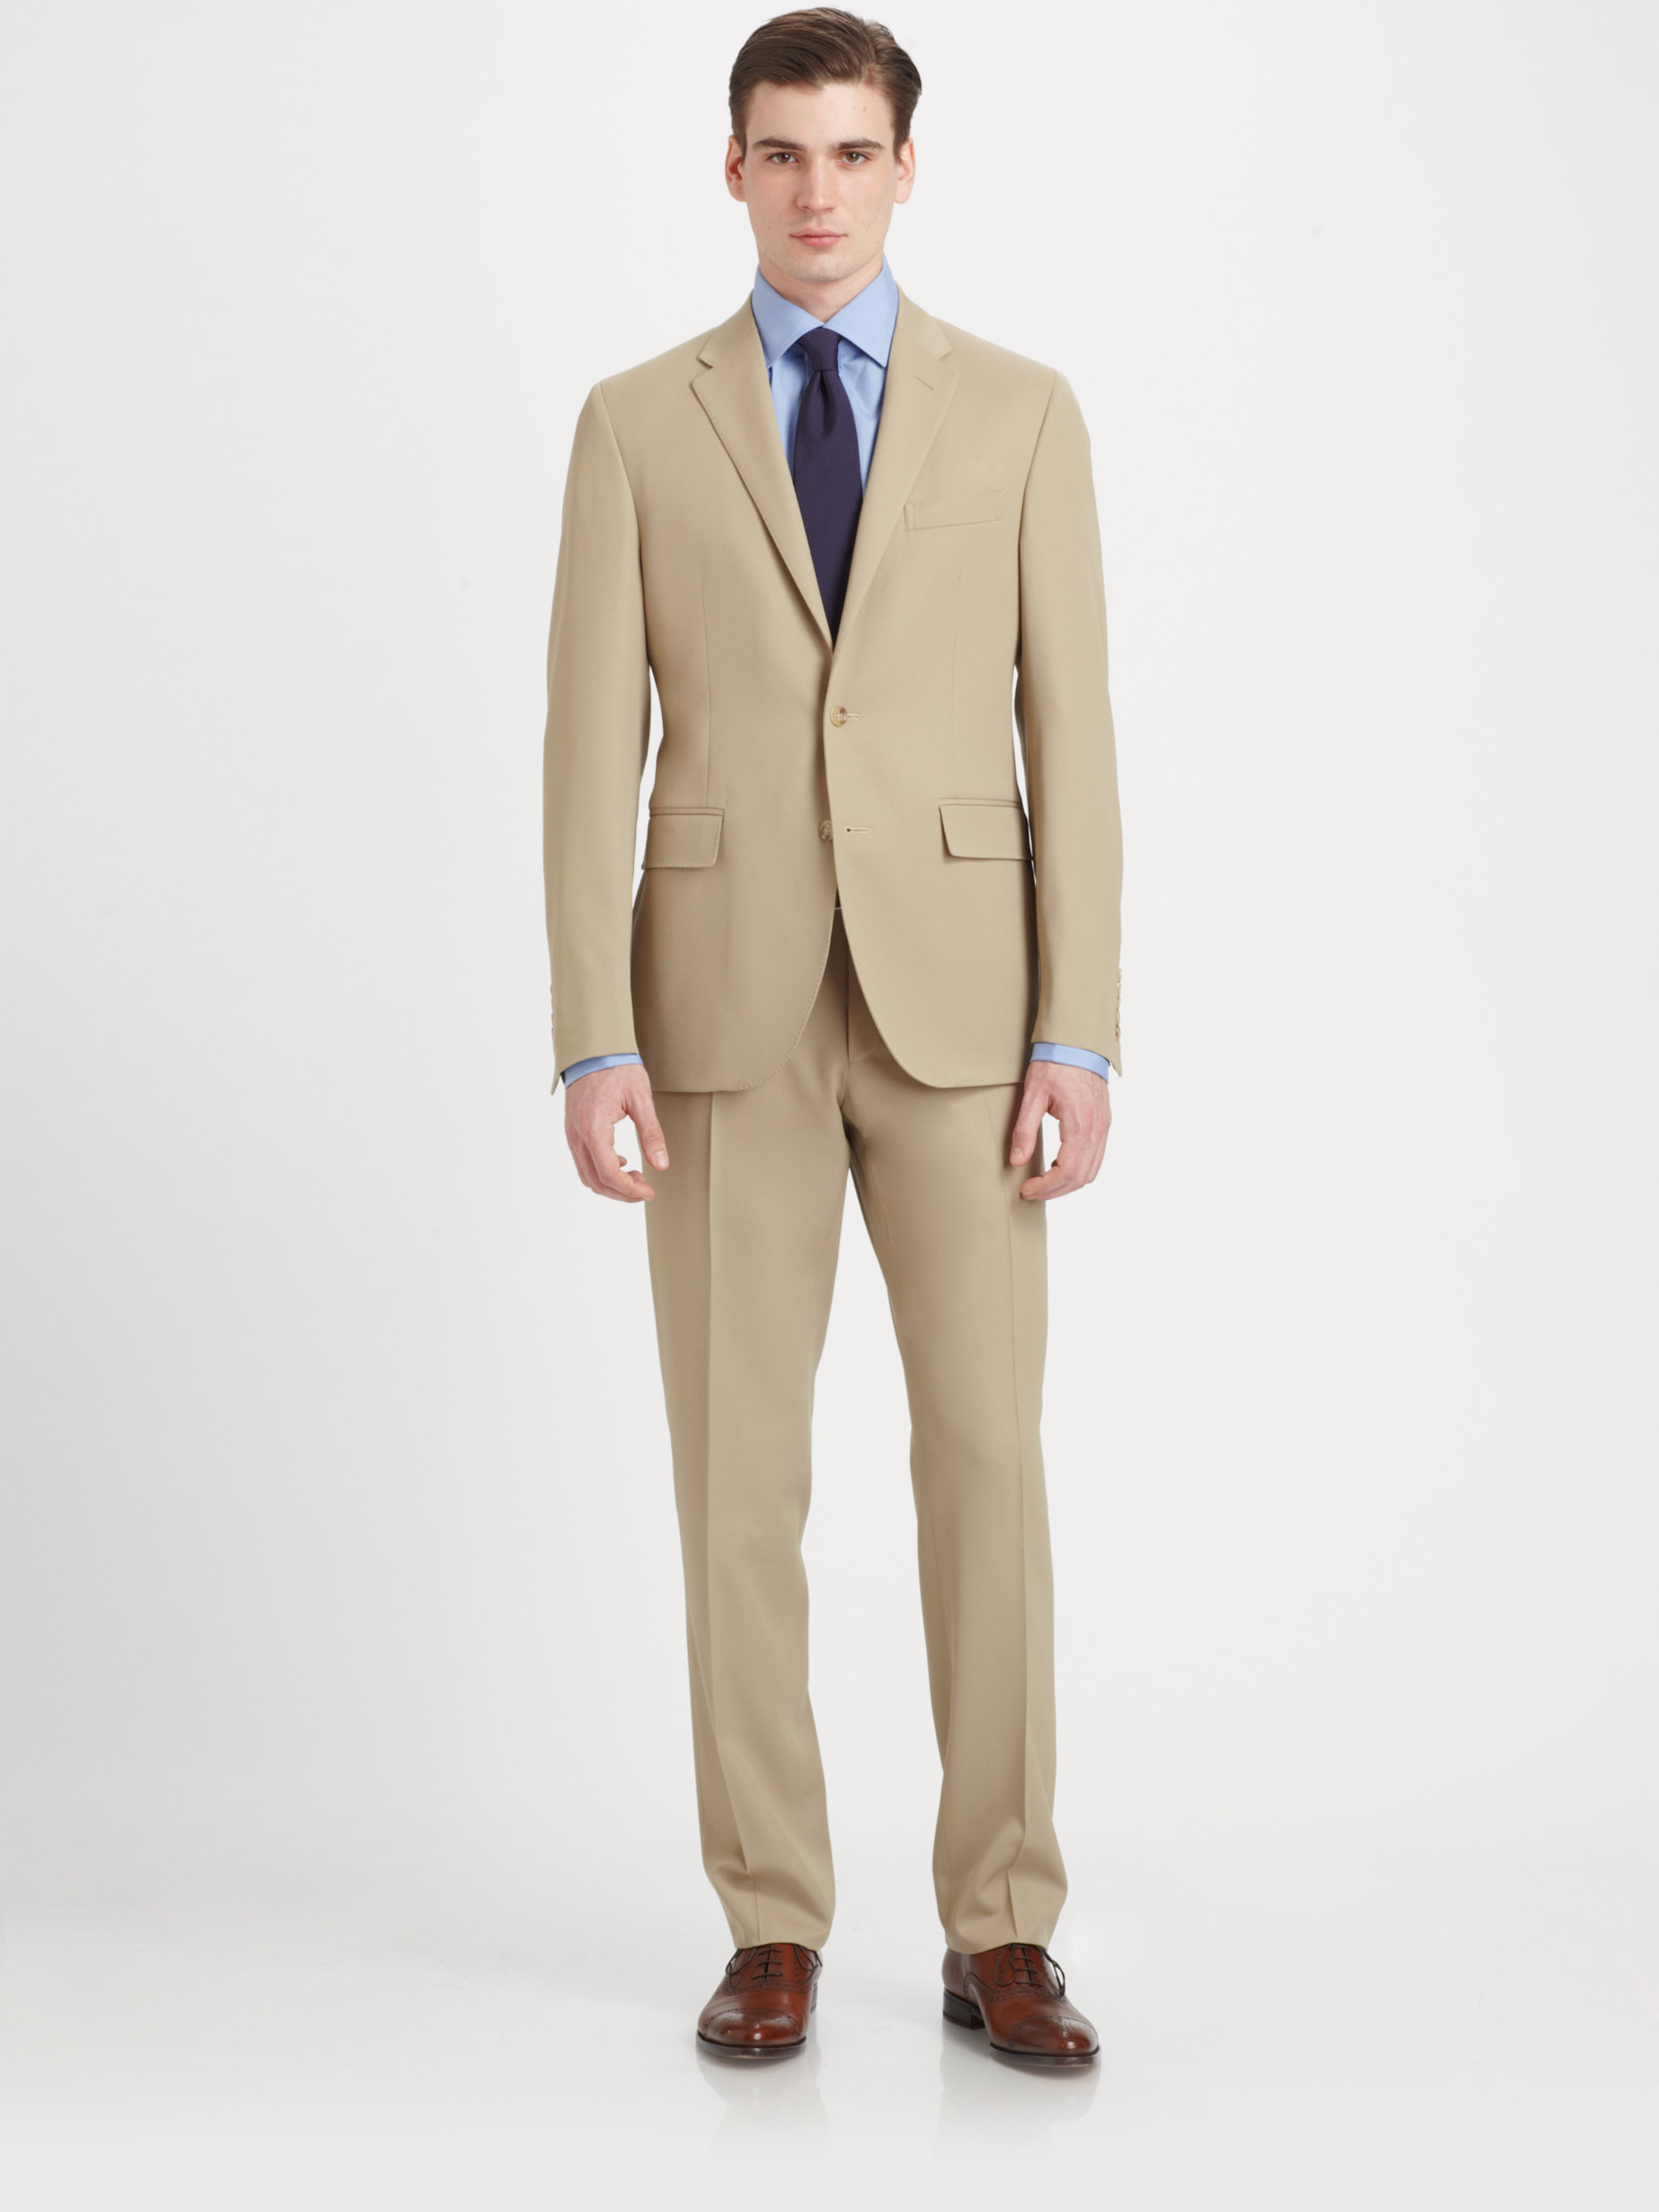 Lyst - Polo Ralph Lauren Wool Gabardine Suit in Natural for Men